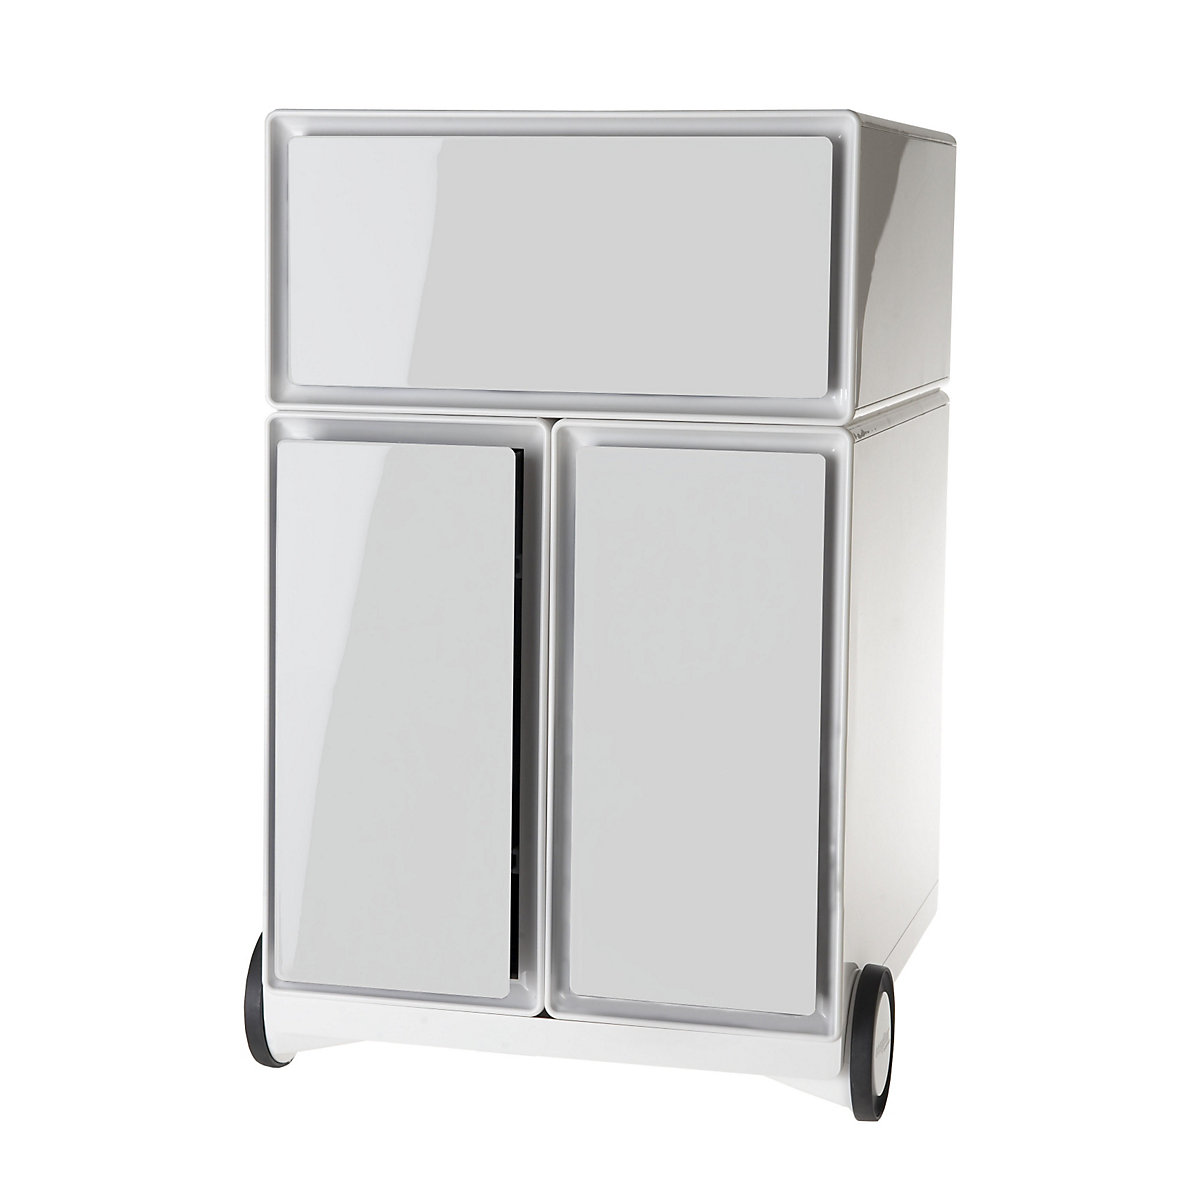 Pojízdný kontejner easyBox® – Paperflow, 1 zásuvka, 2 výsuvy pro závěsné složky, bílá / bílá-12